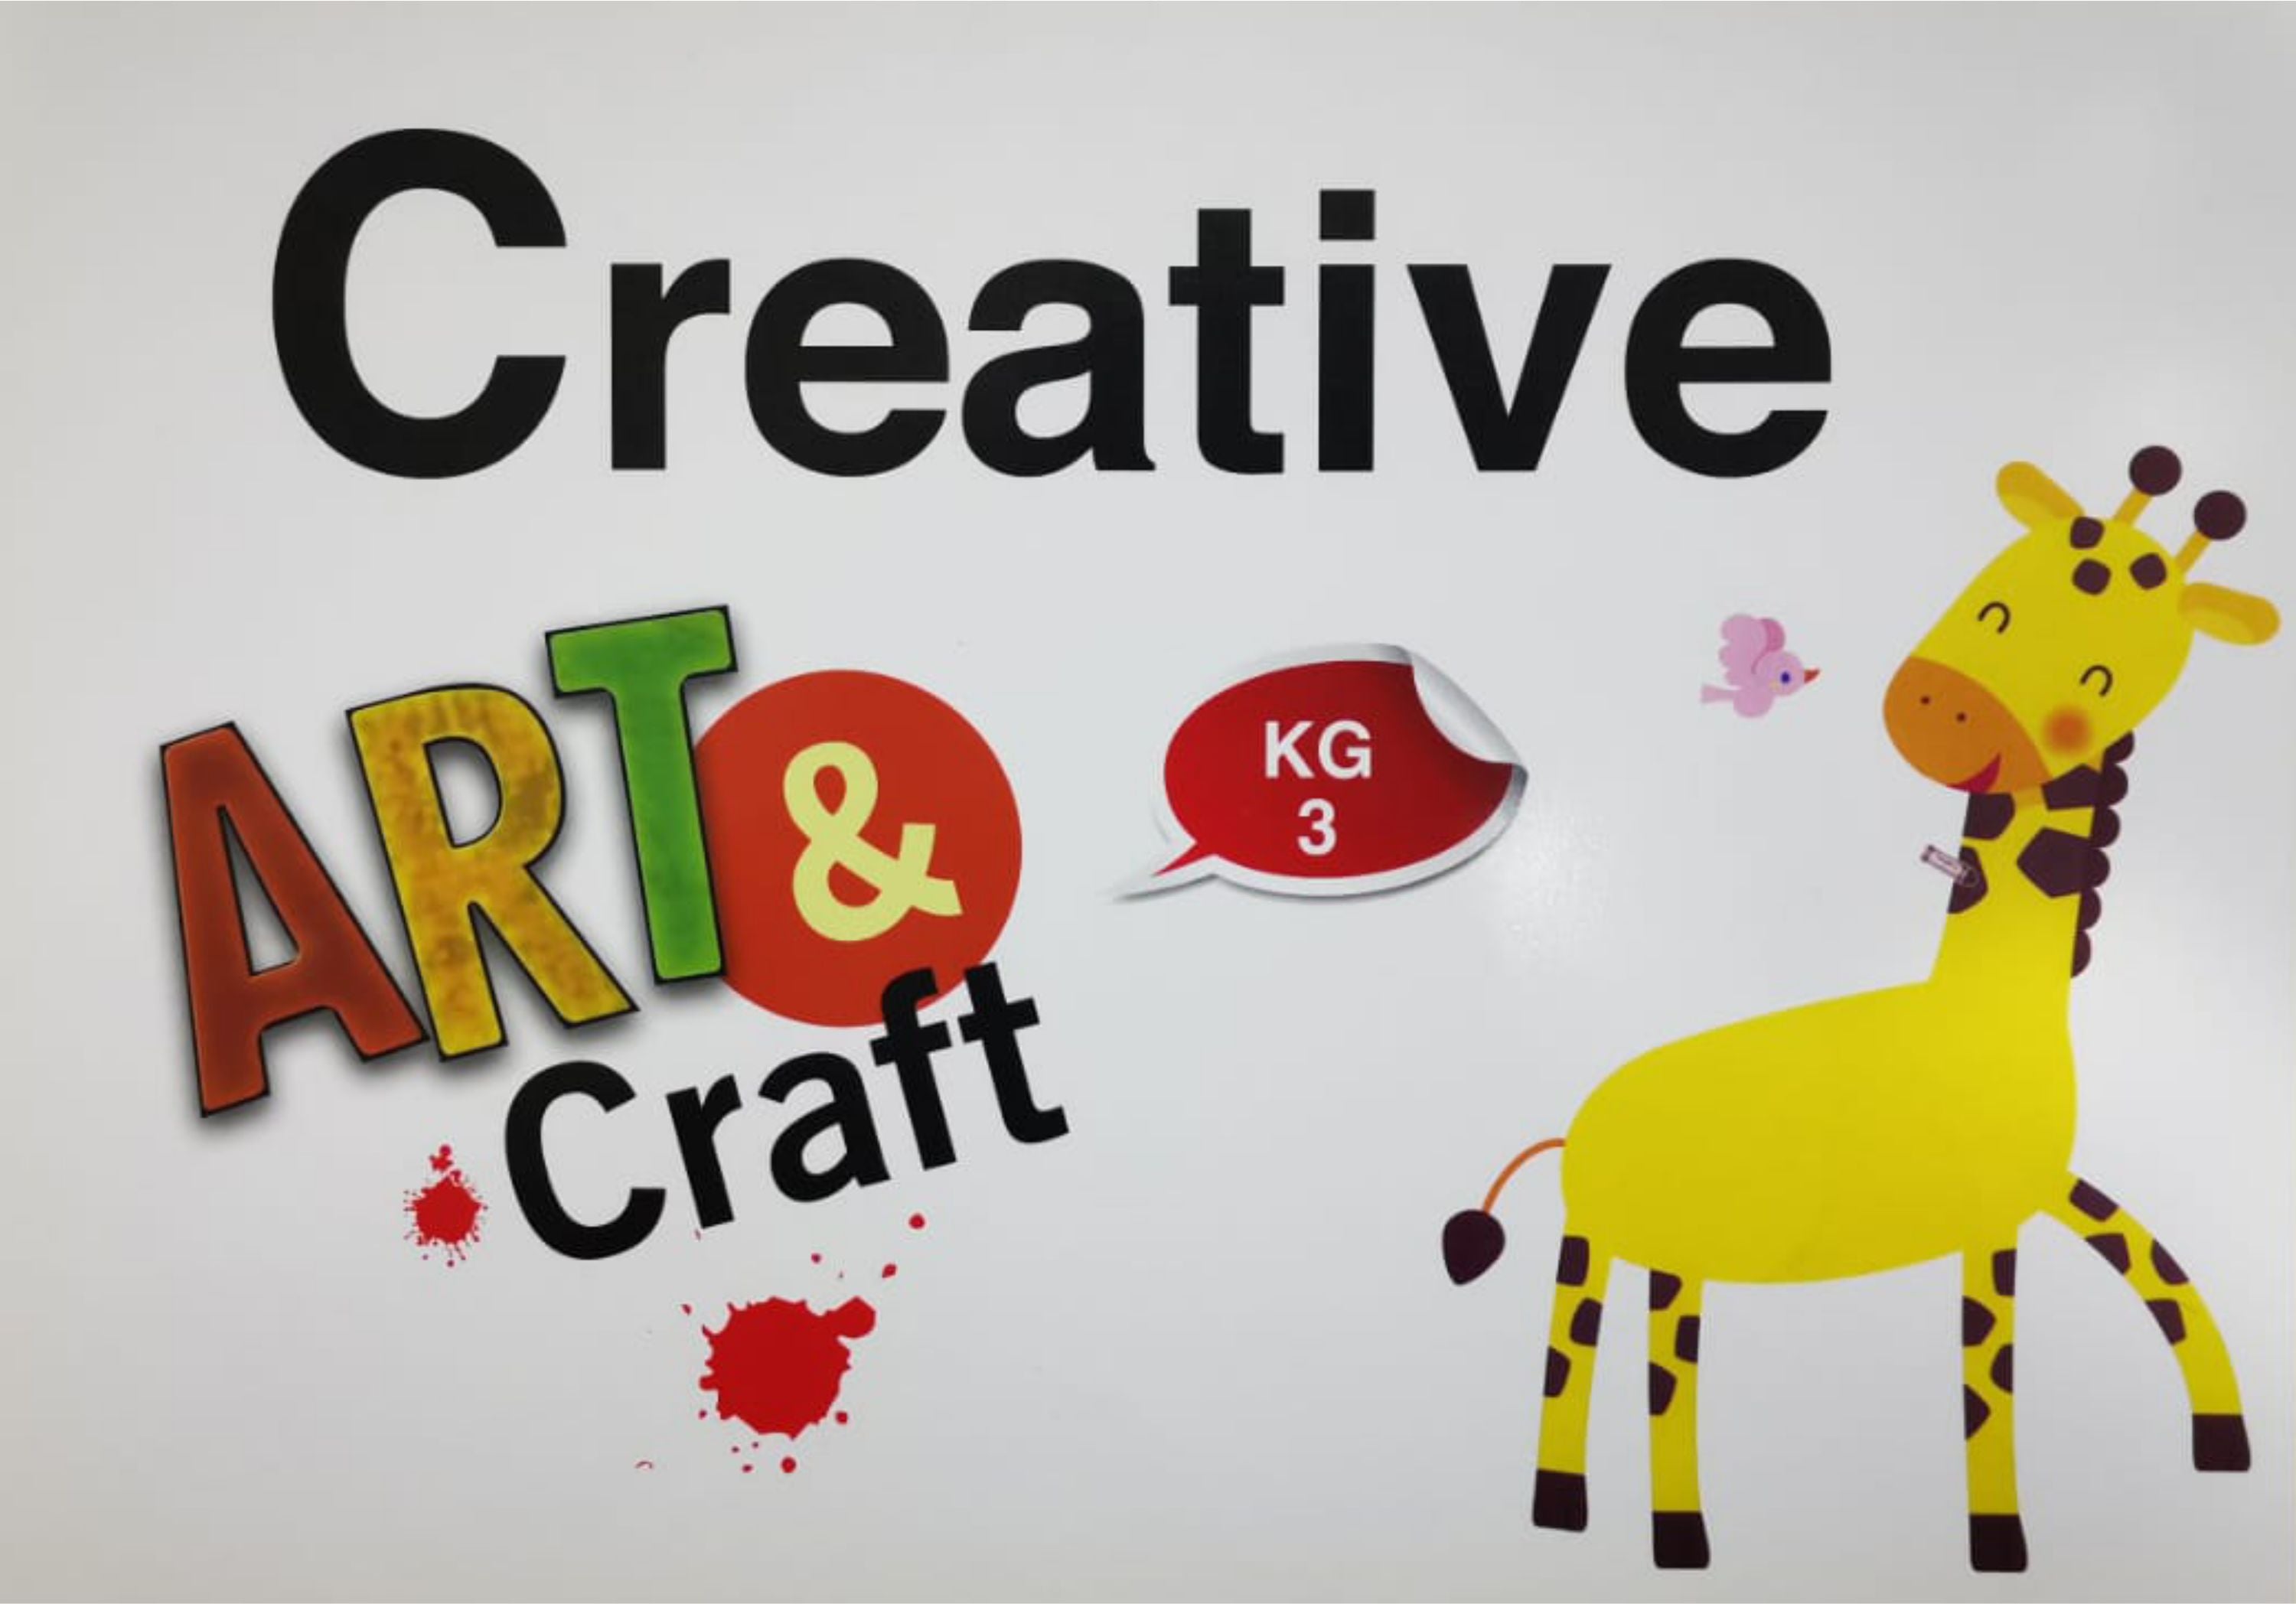 Creative- Art & Craft- KG3